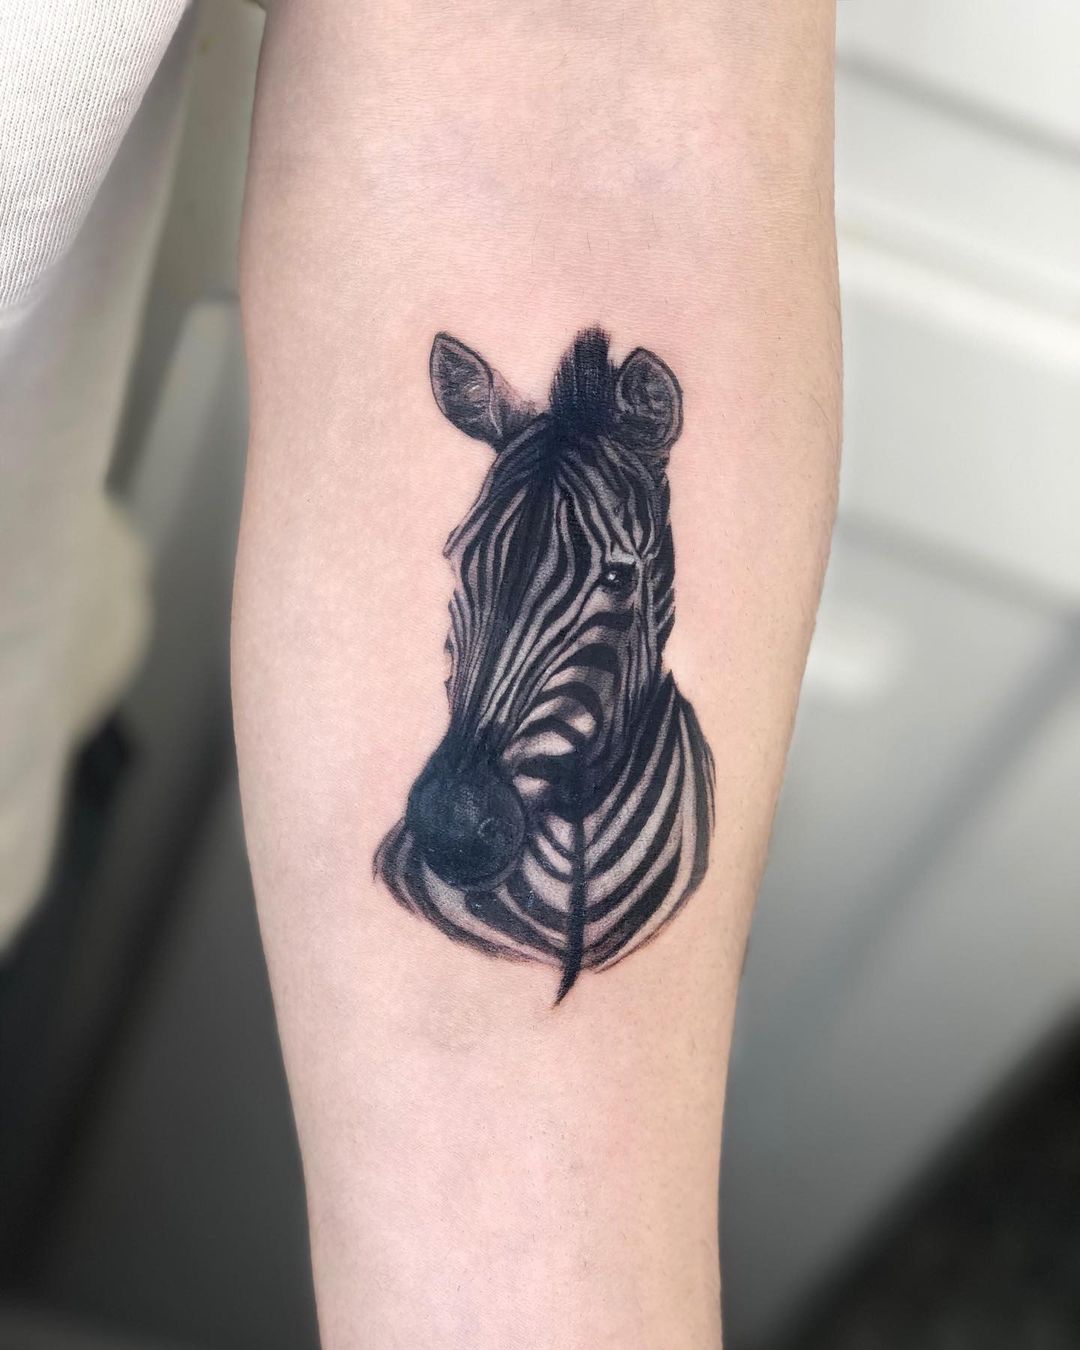 Black and white zebra tattoo by melikeylldiz